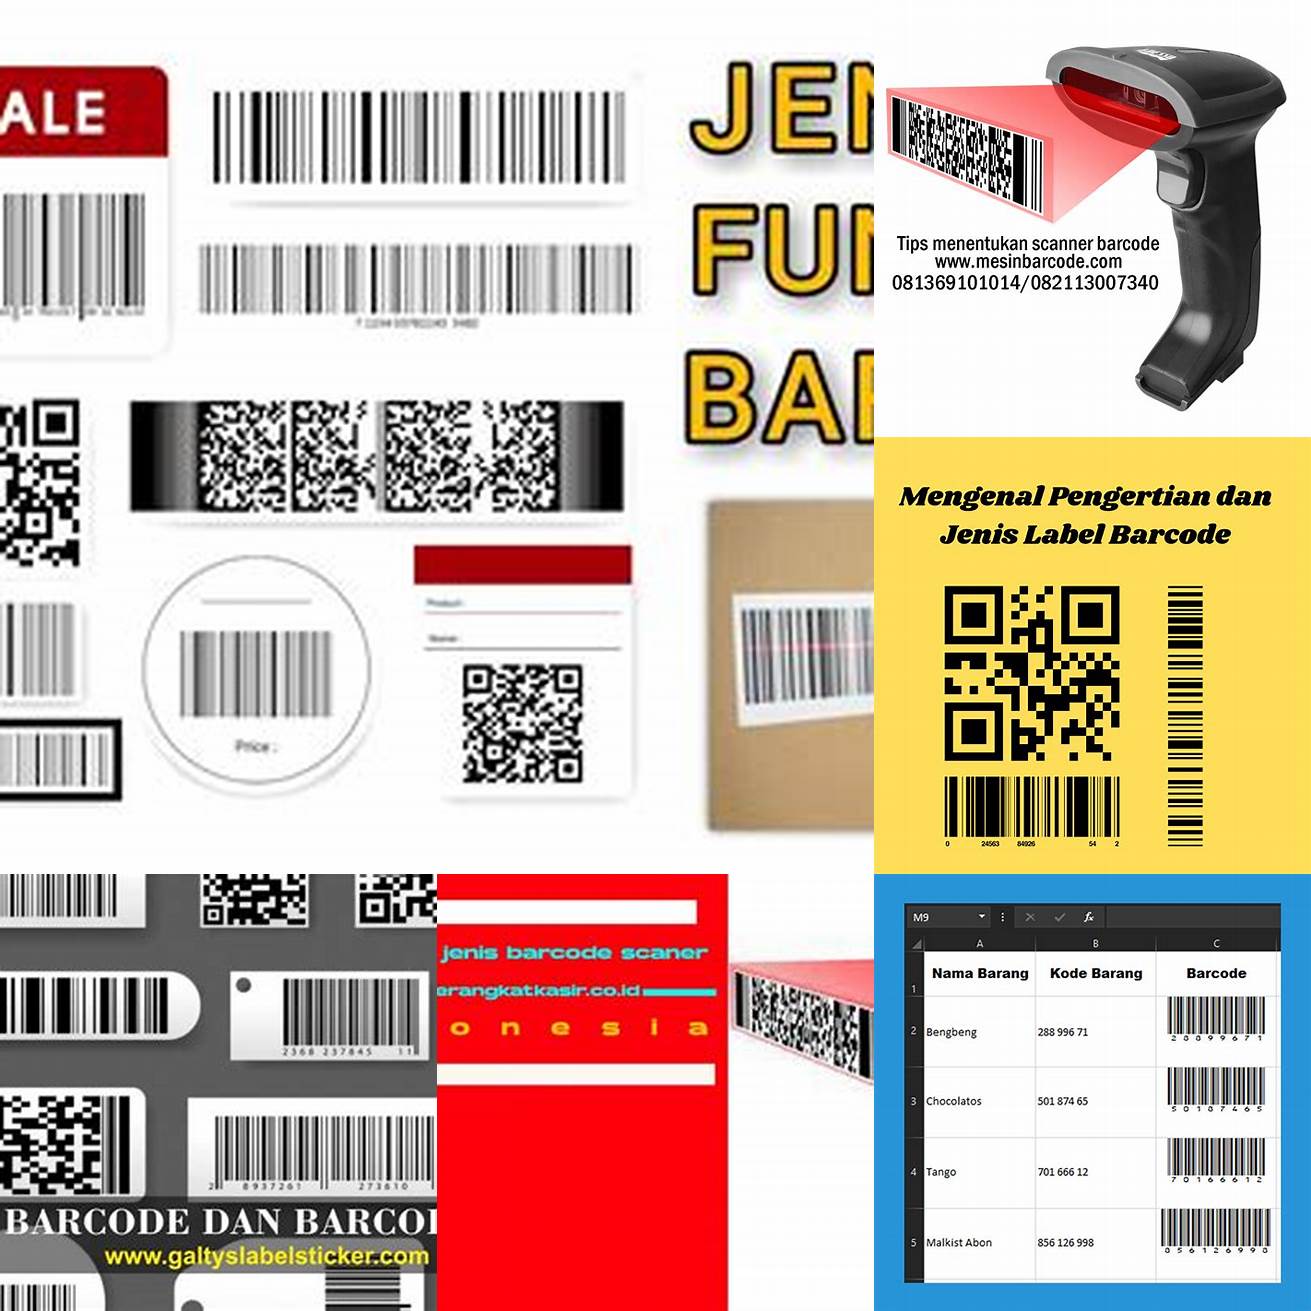 Kedua pilih jenis barcode yang ingin kamu buat